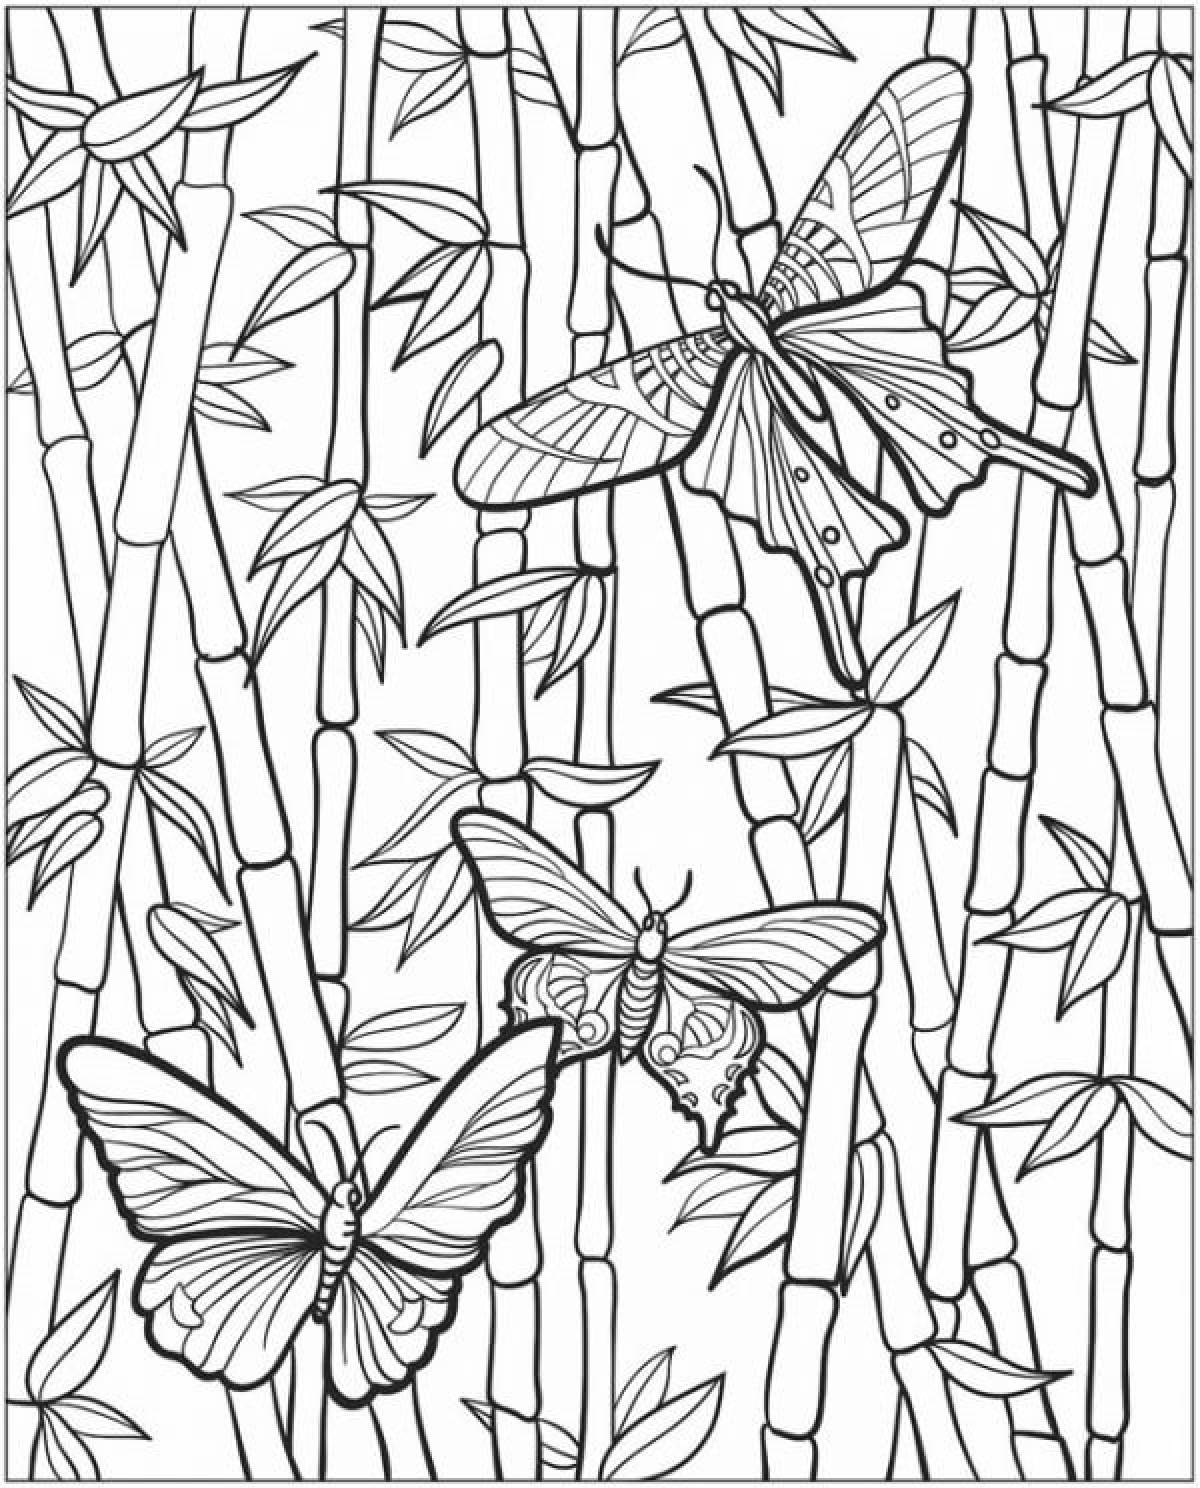 Bamboo and butterflies